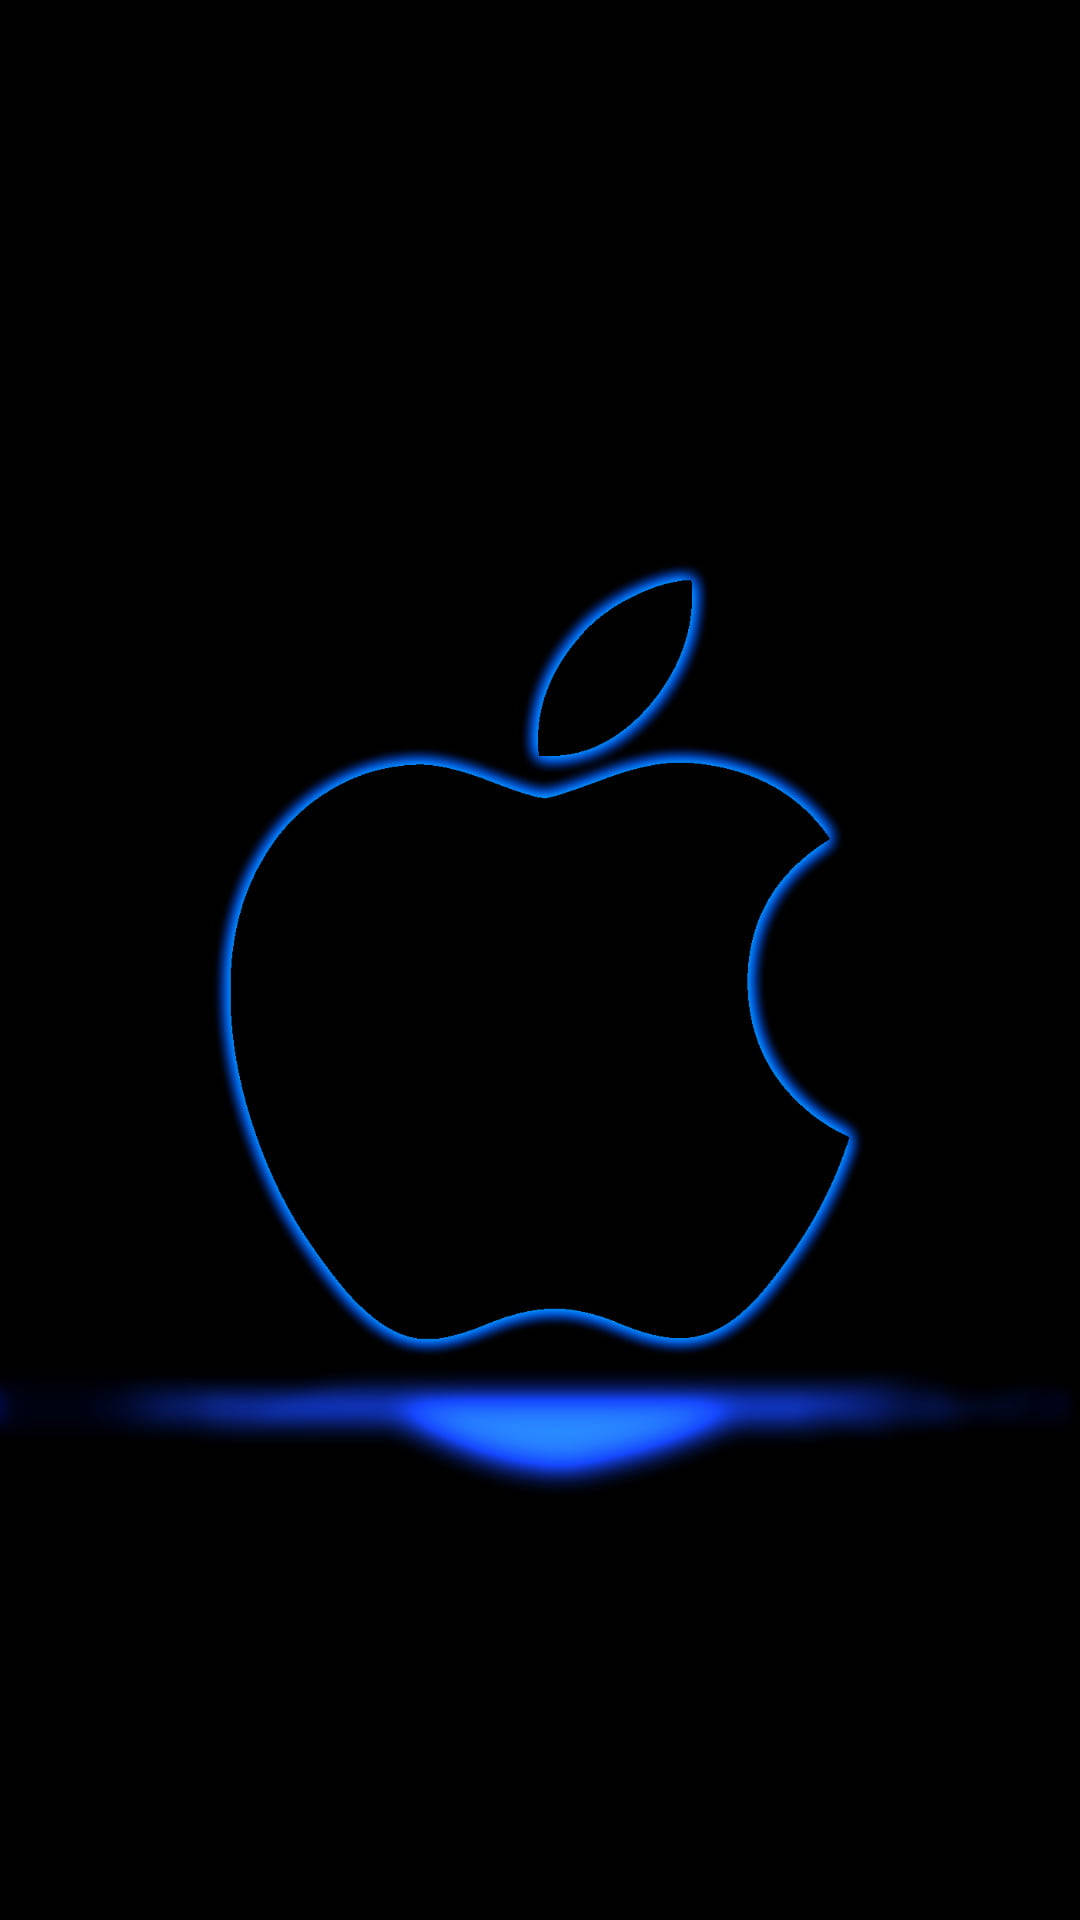 Full Hd Apple In Blue Pattern Picture